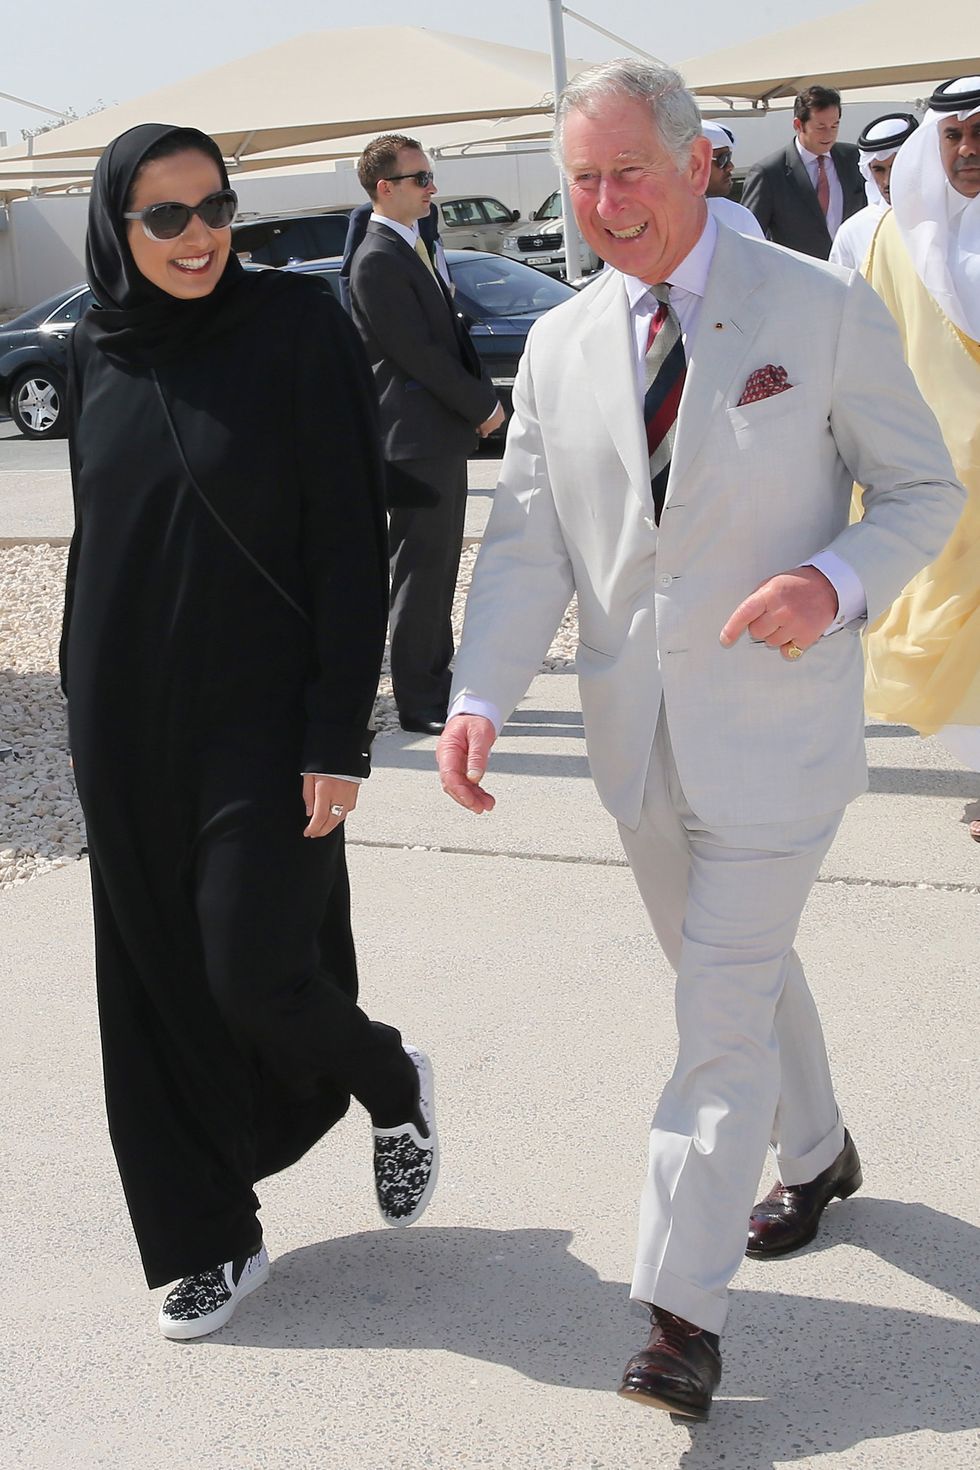 Sheikha Al-Mayassa with Prince Charles in Doha in 2014